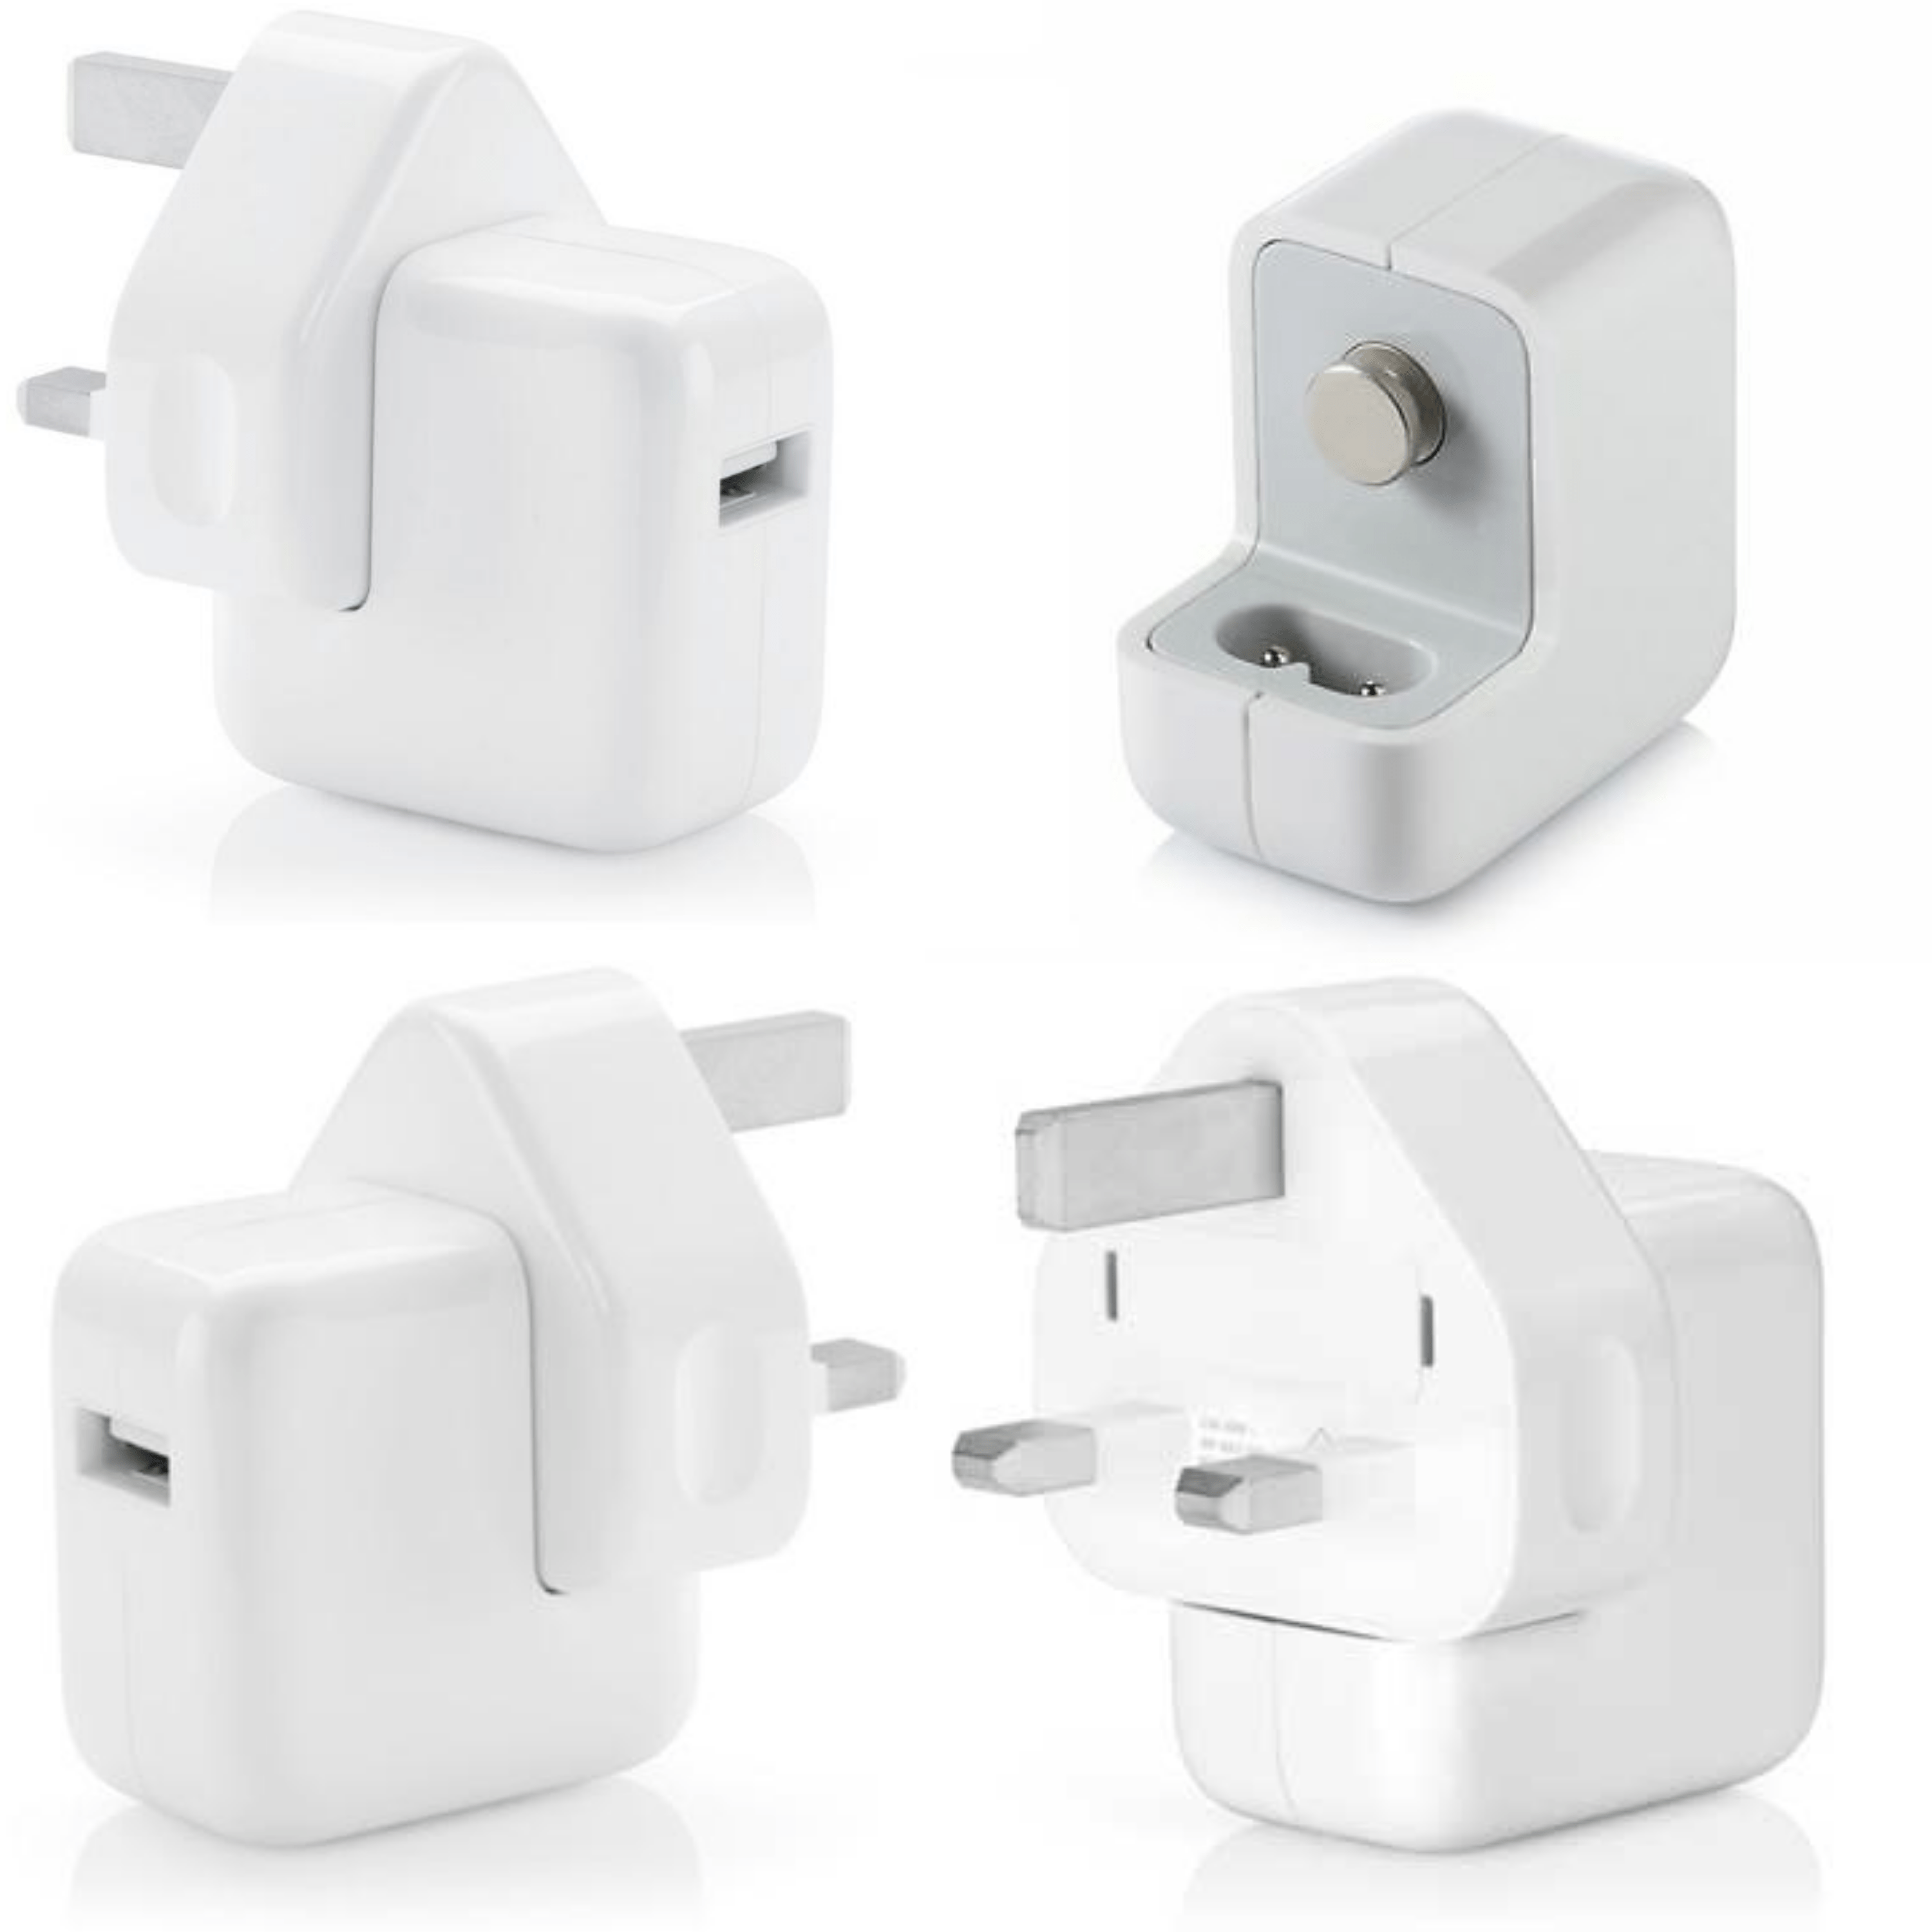 12w charger for iPad Air, iPad Air 2, iPad Mini or any iPhone